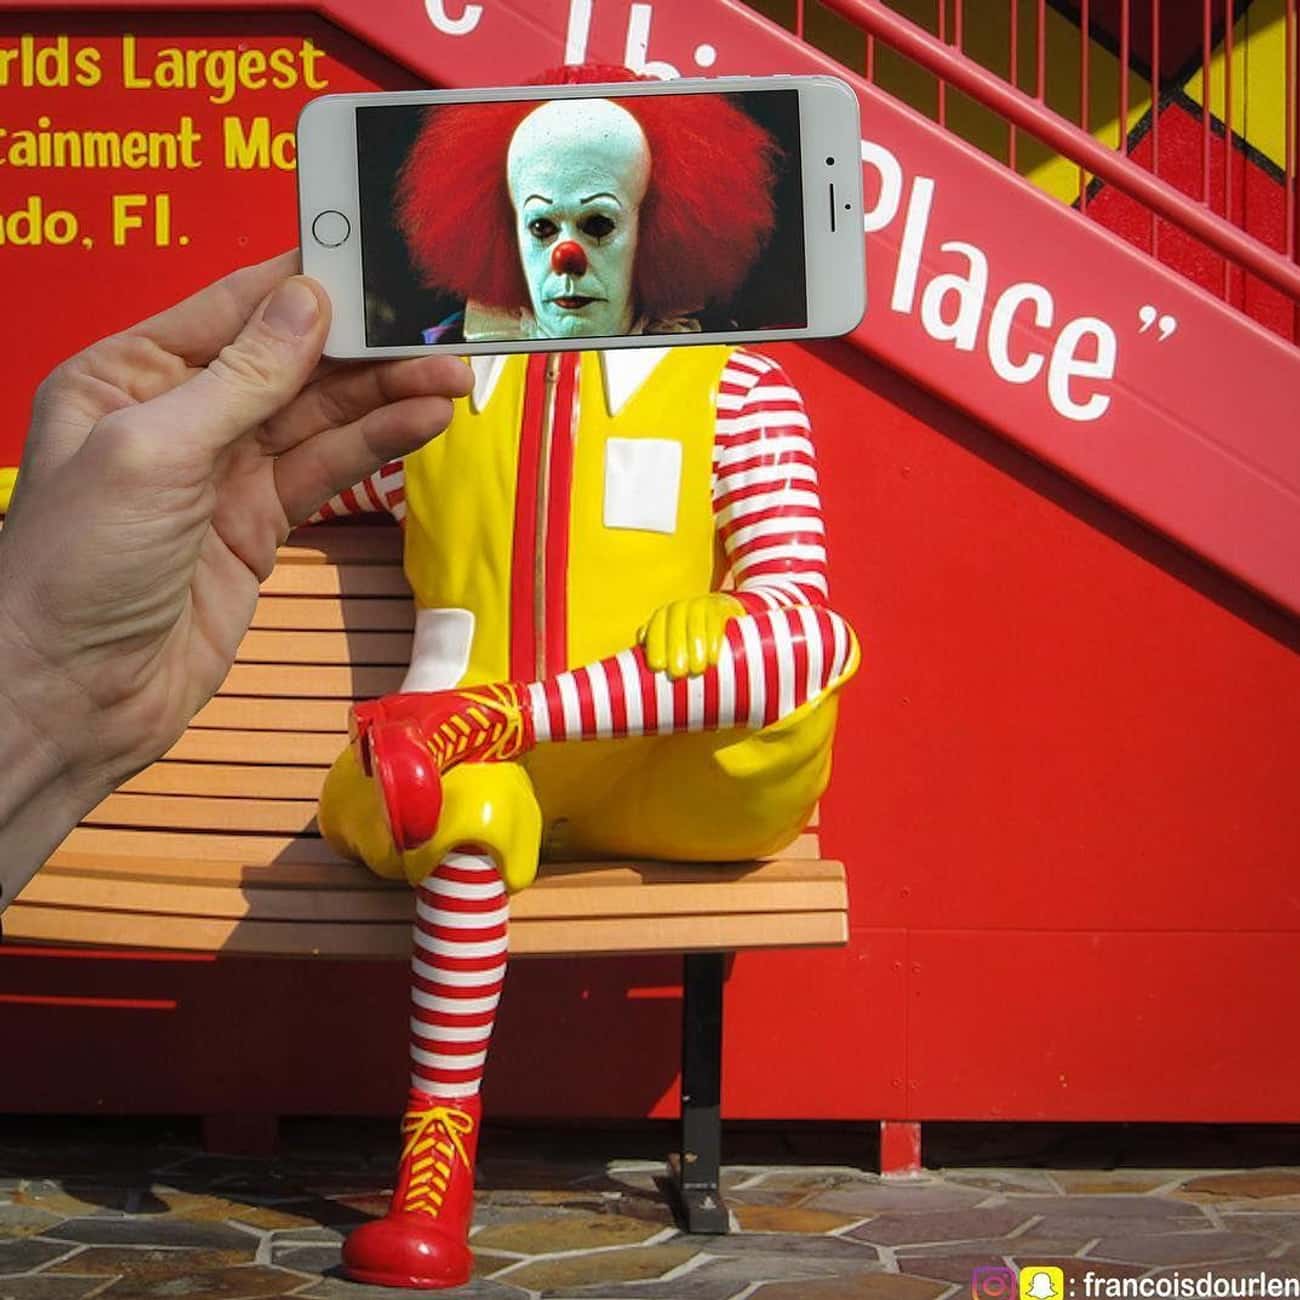 An Evil Clown In A Hamburger Dealer's Clothing